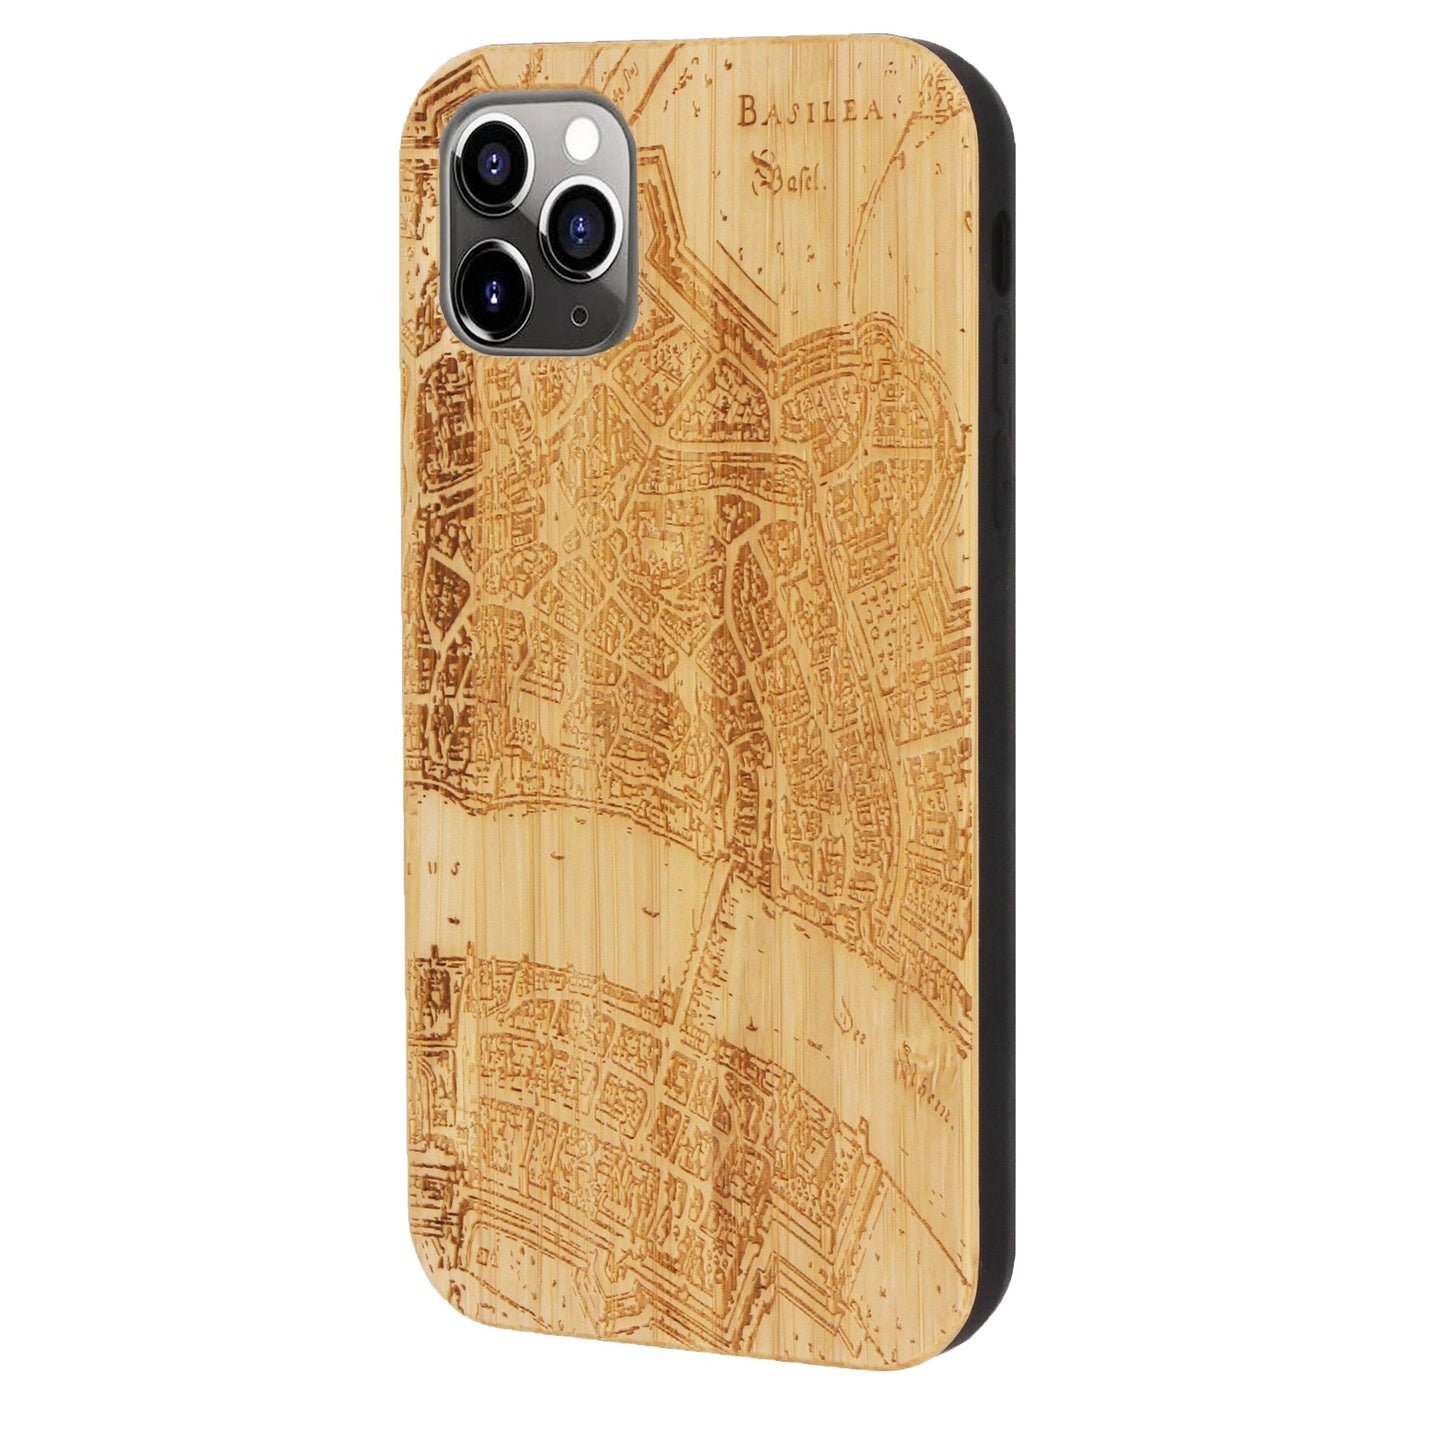 Basel Merian Eden Bamboo Case for iPhone 11 Pro Max